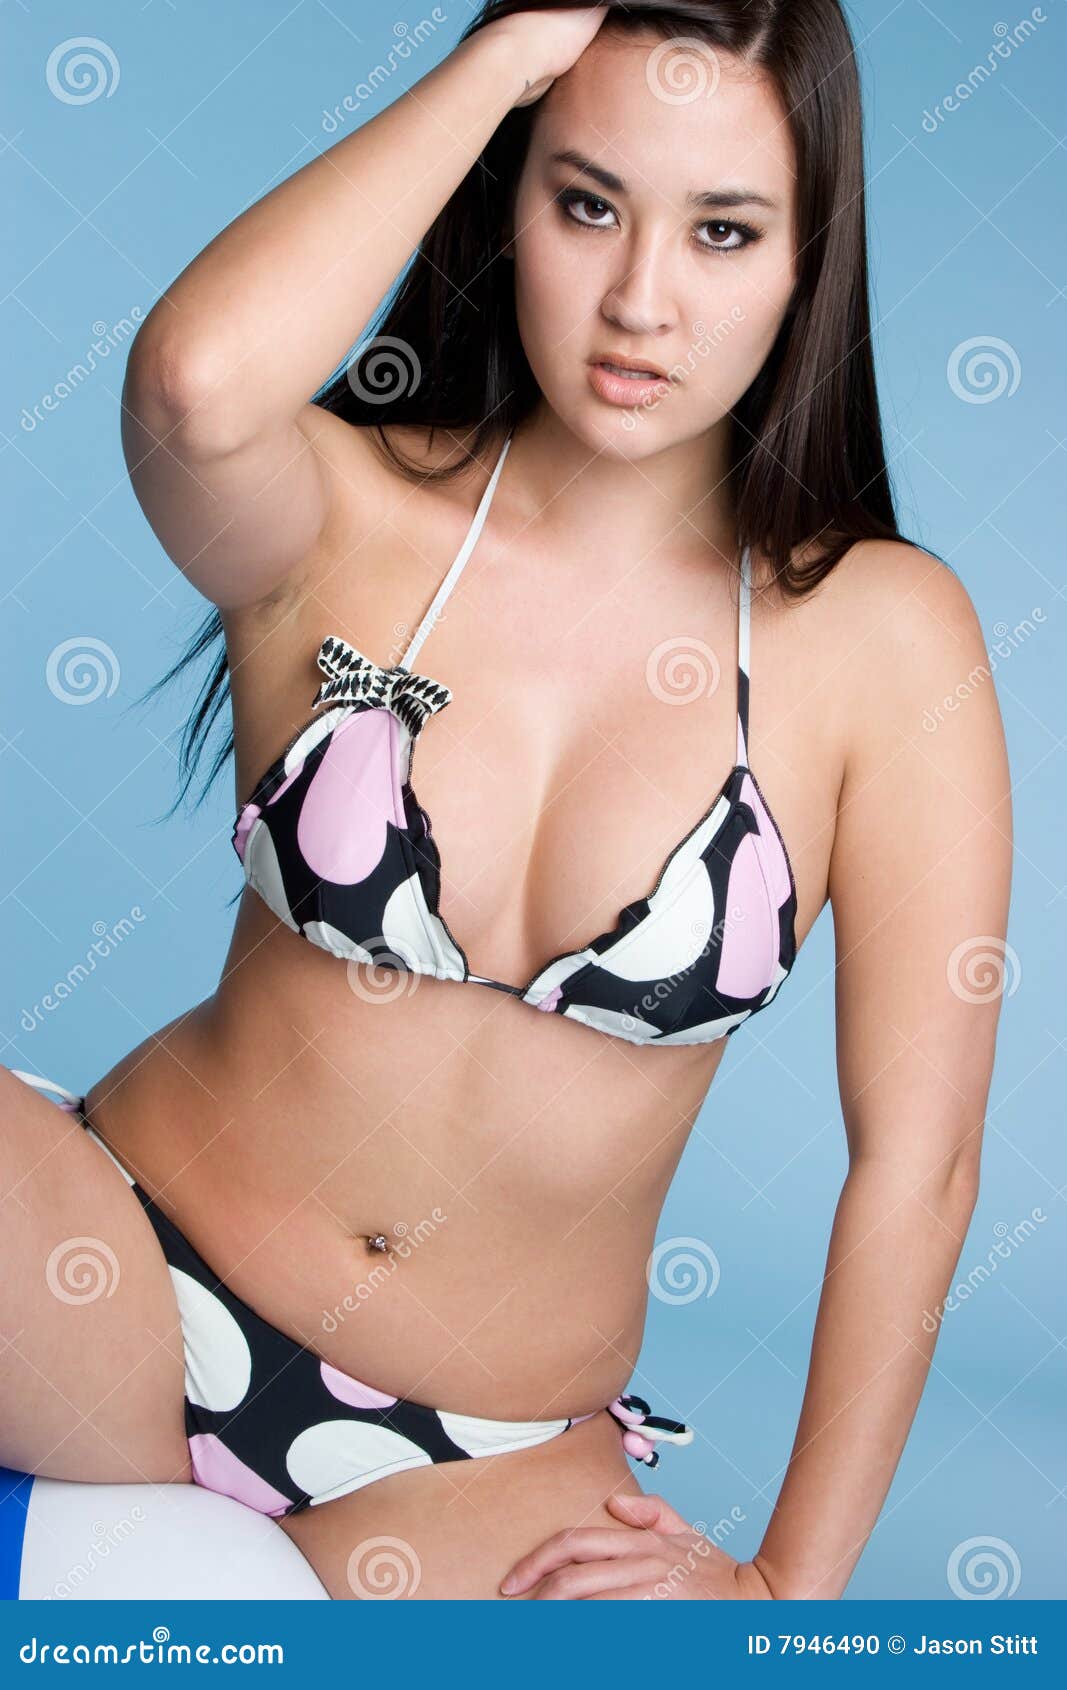 bikini girl in asian a